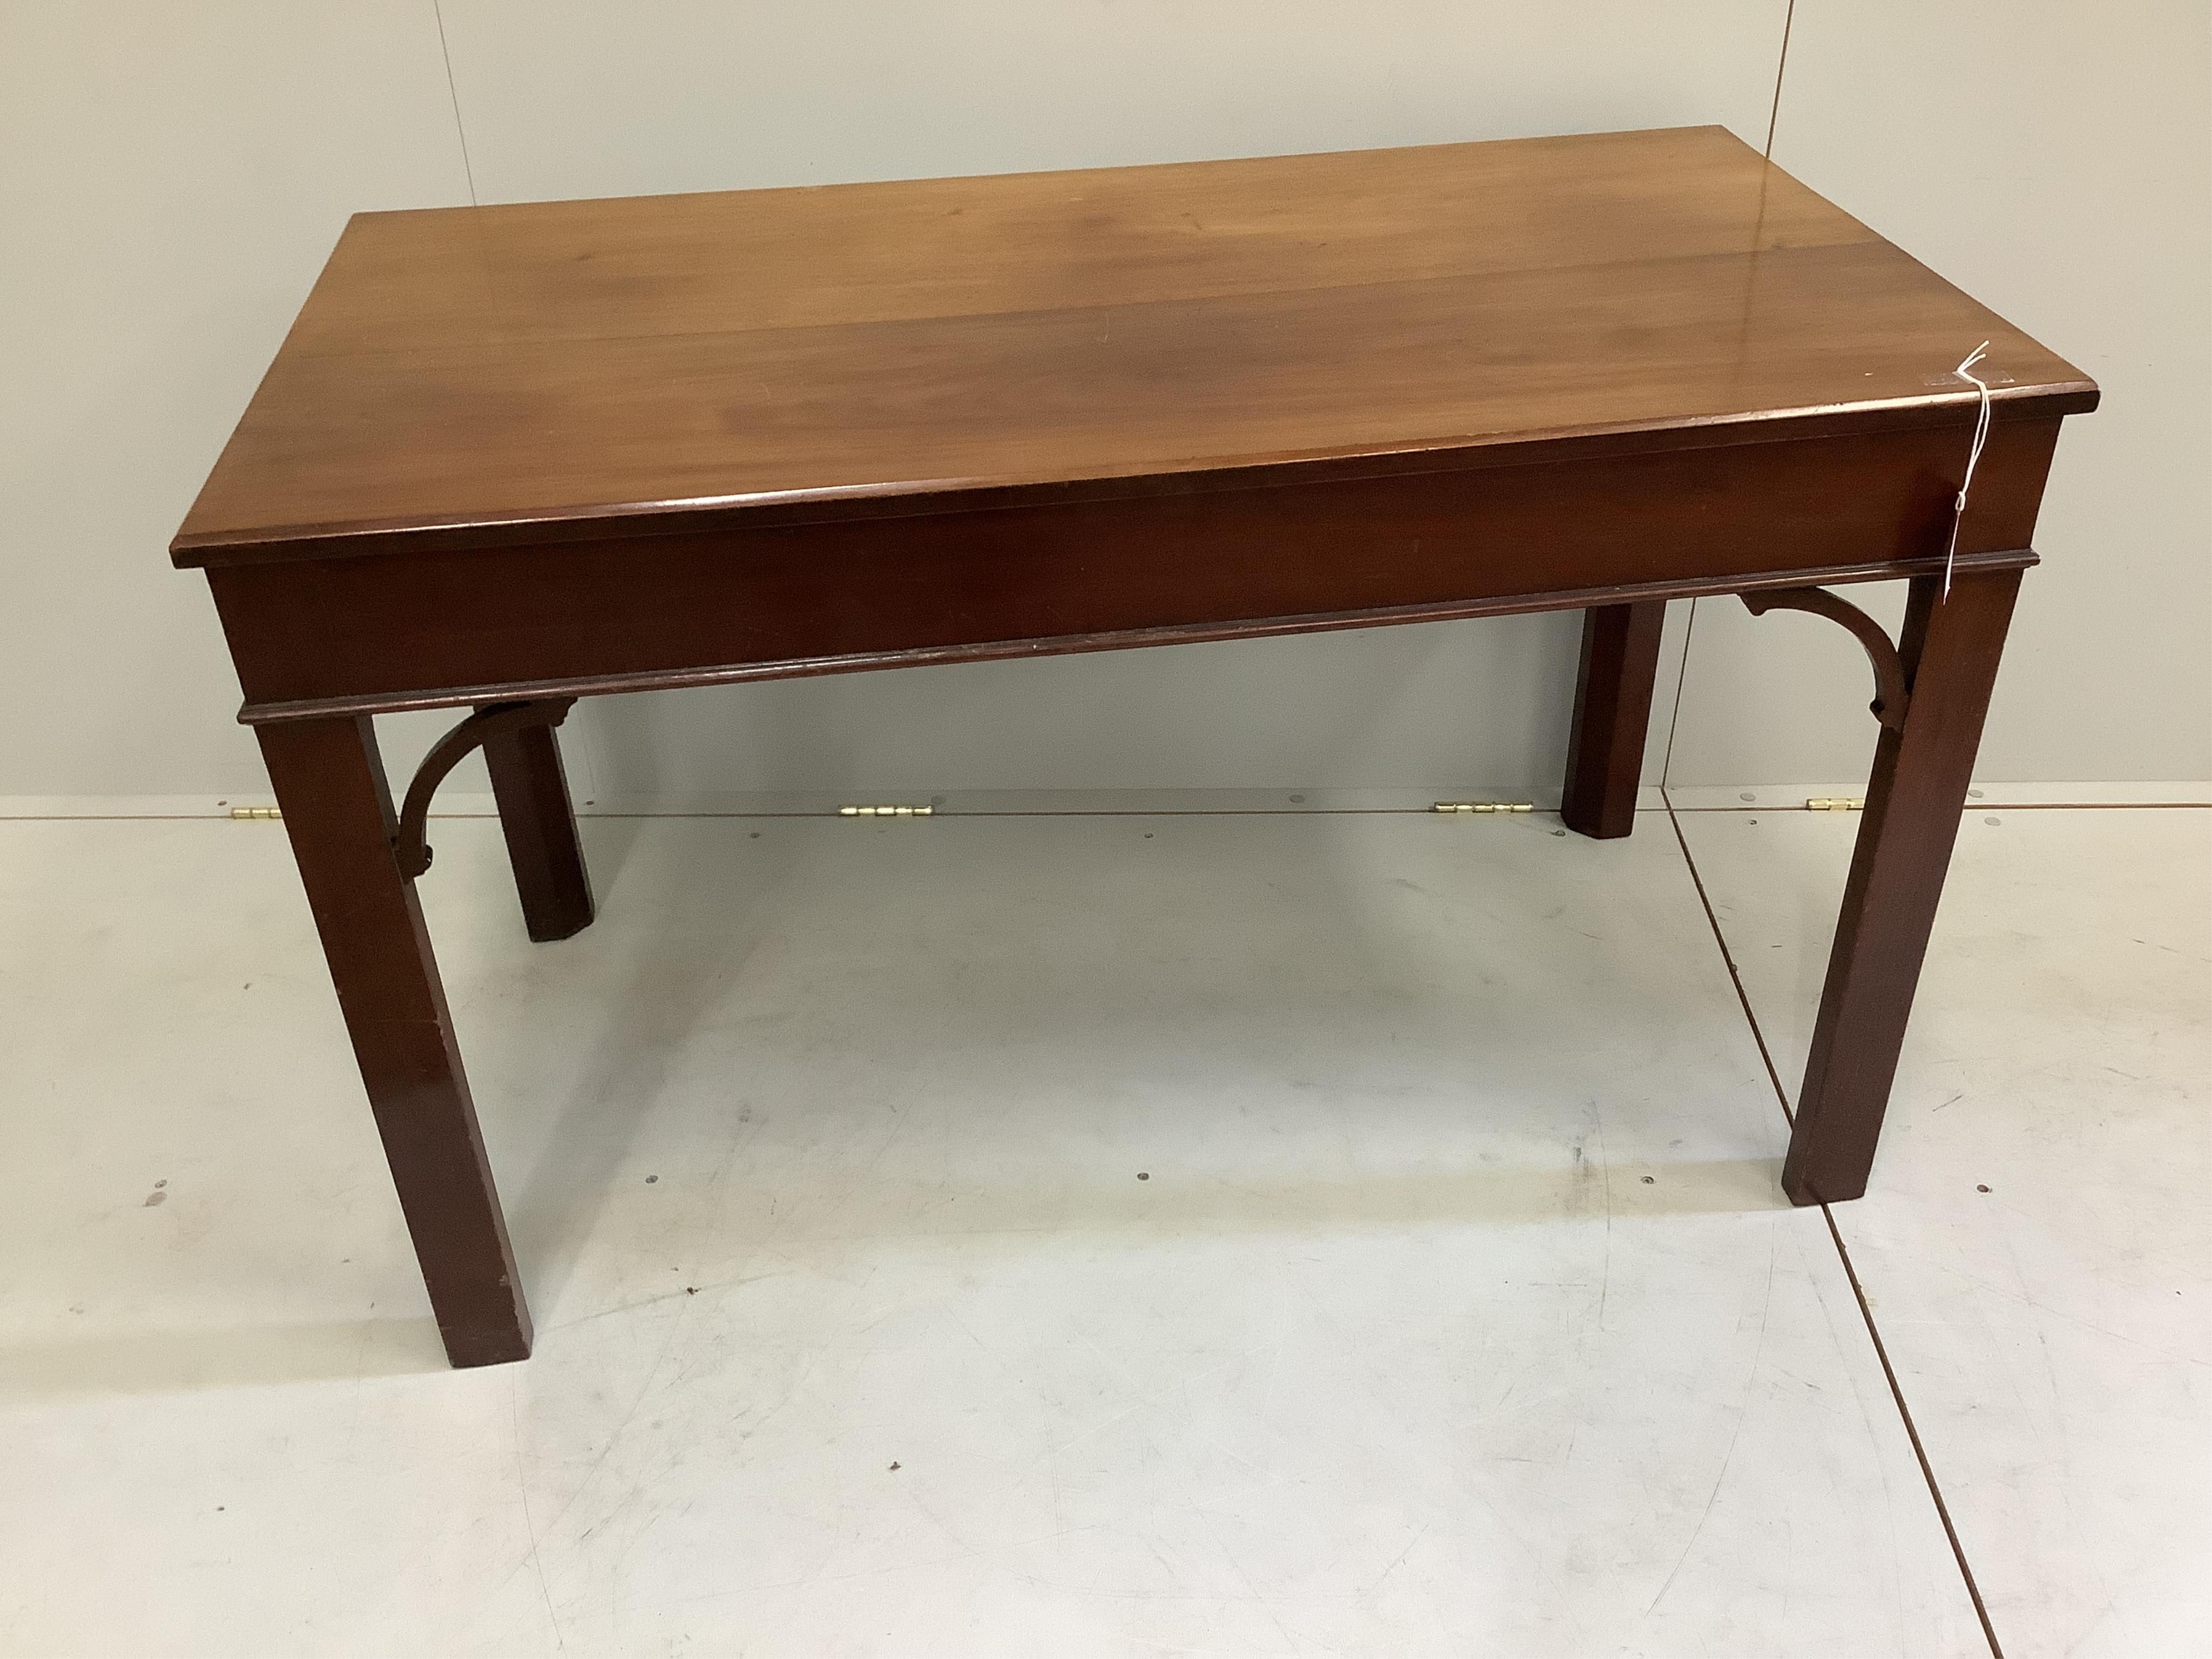 A George III style rectangular mahogany console table, width 120cm, depth 63cm, height 73cm